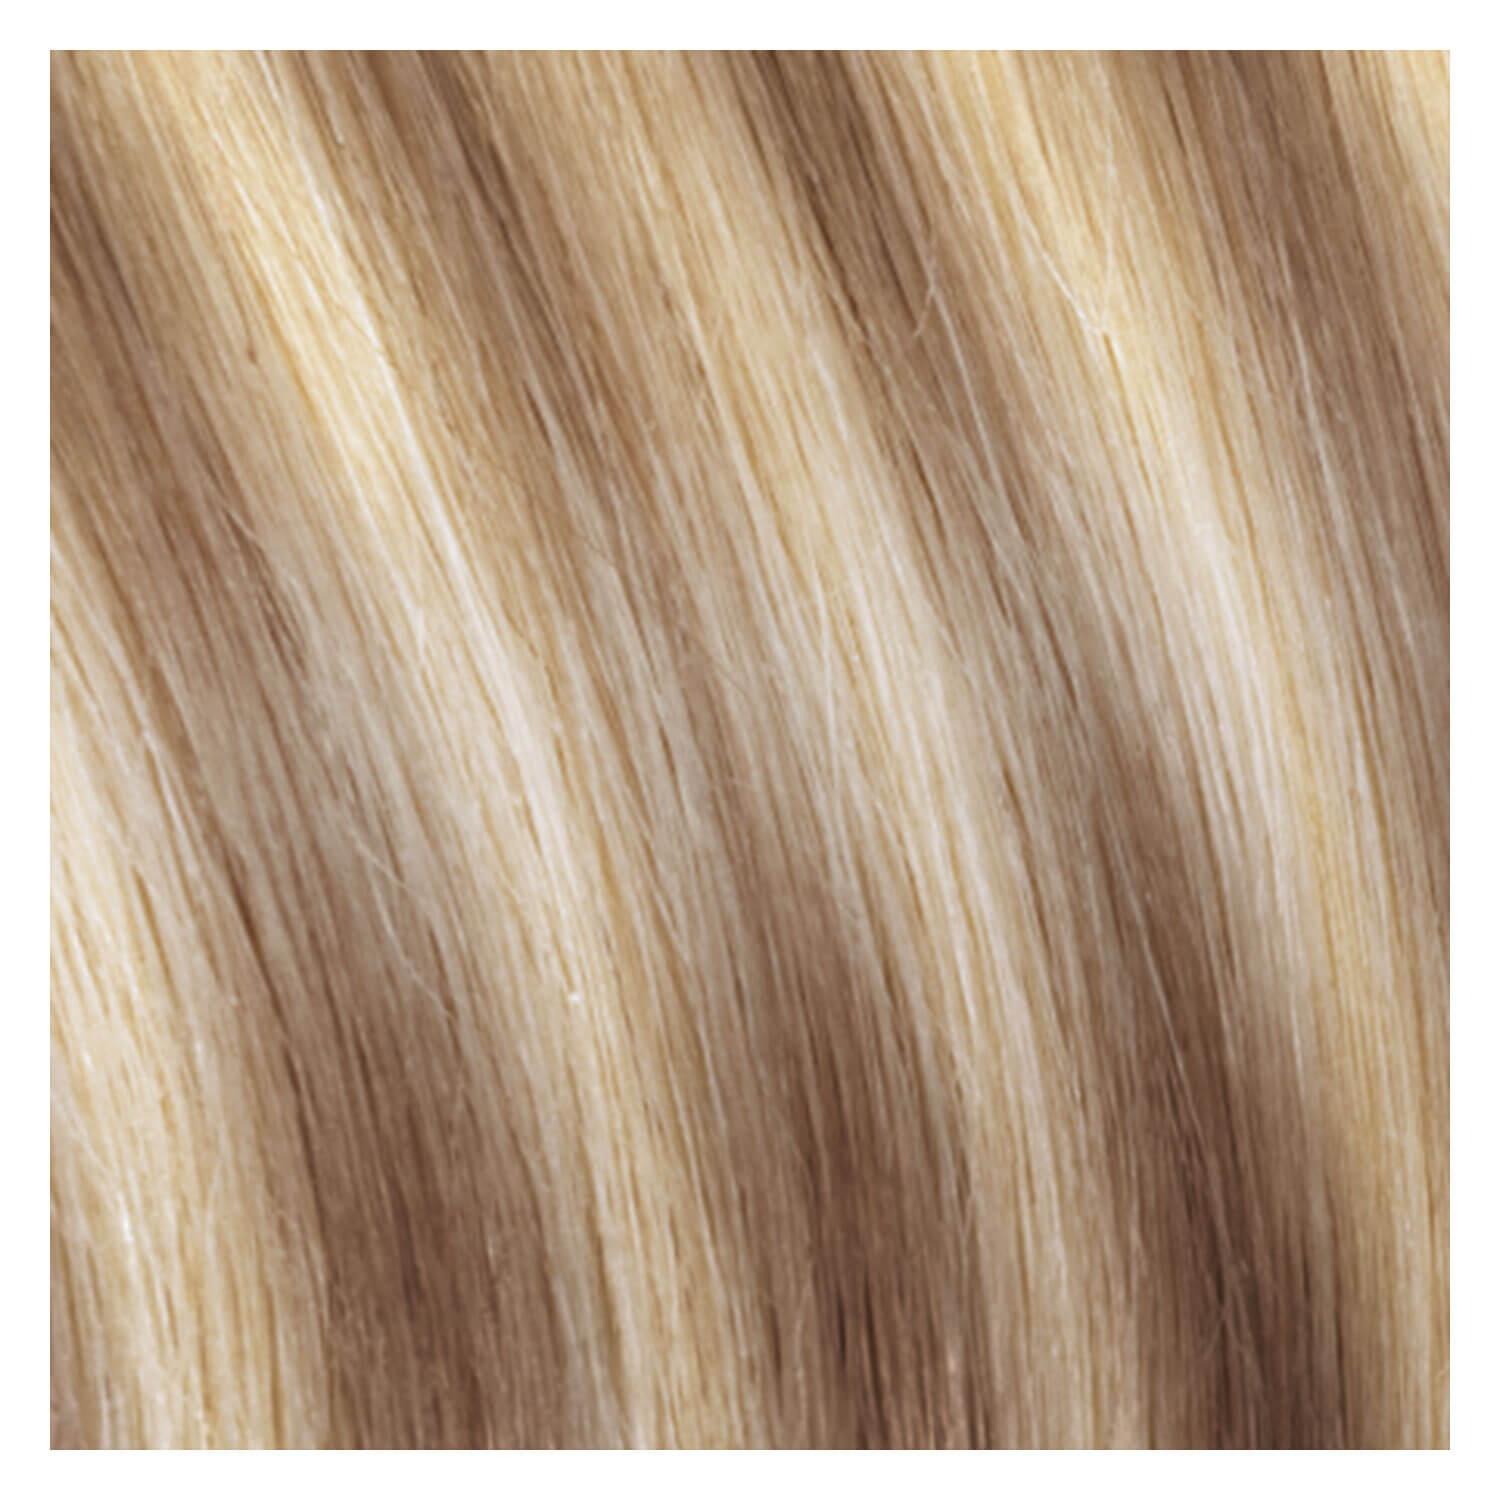 SHE Bonding-System Hair Extensions Straight - M14/1001 Natural Light Blond/Very Light Platinum Blond 55/60cm